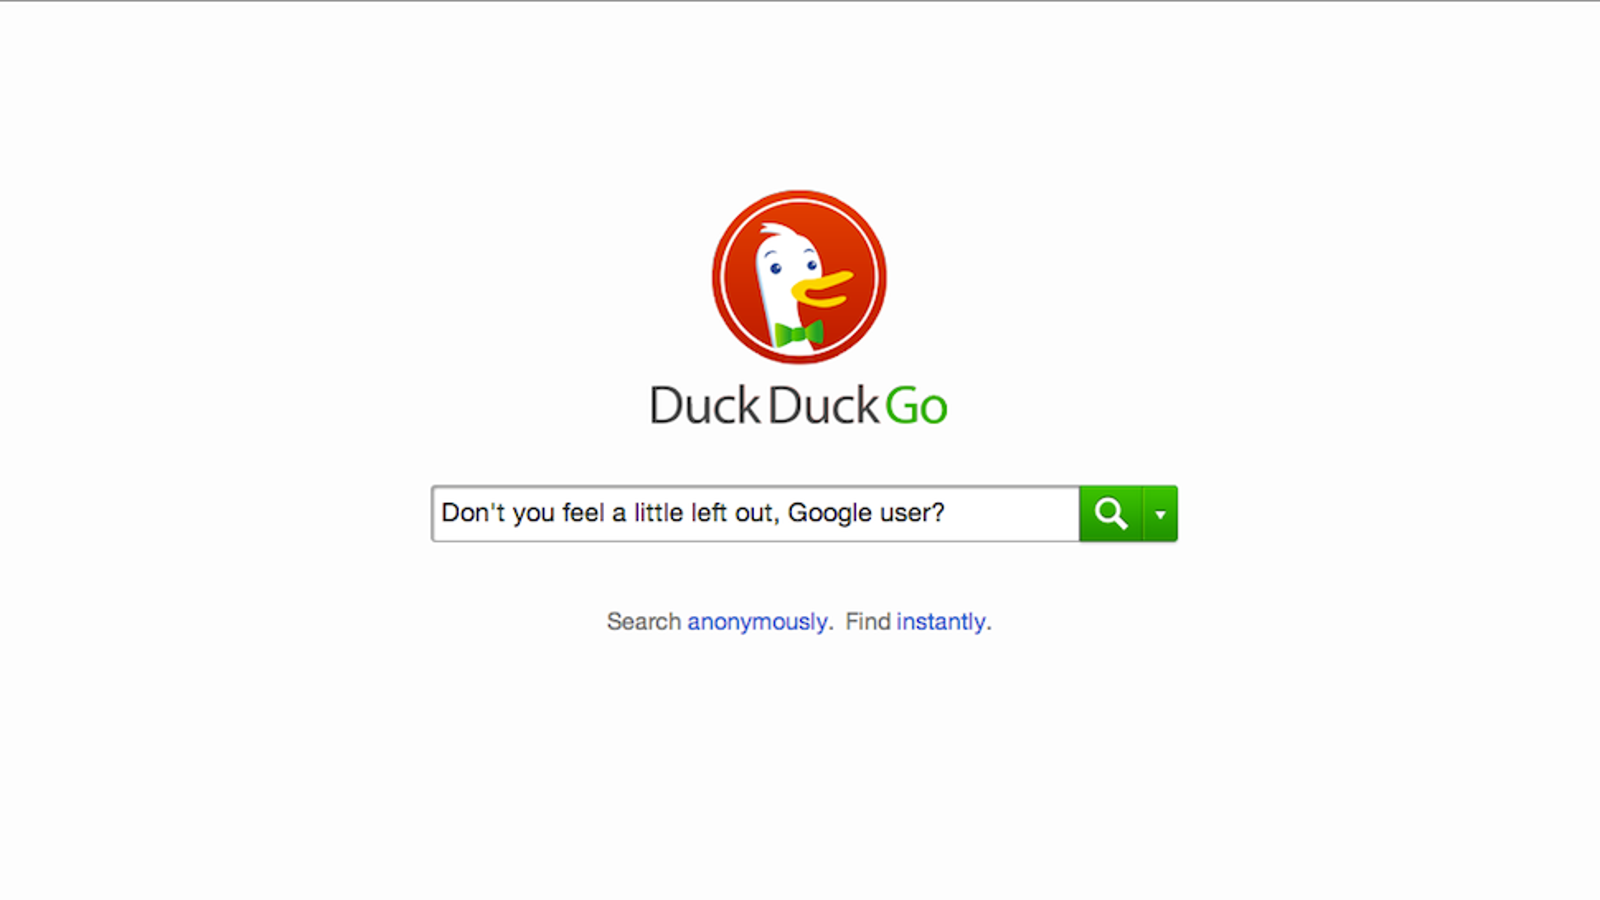 Duckduckgo Handled 1 Billion Search Queries In 2013